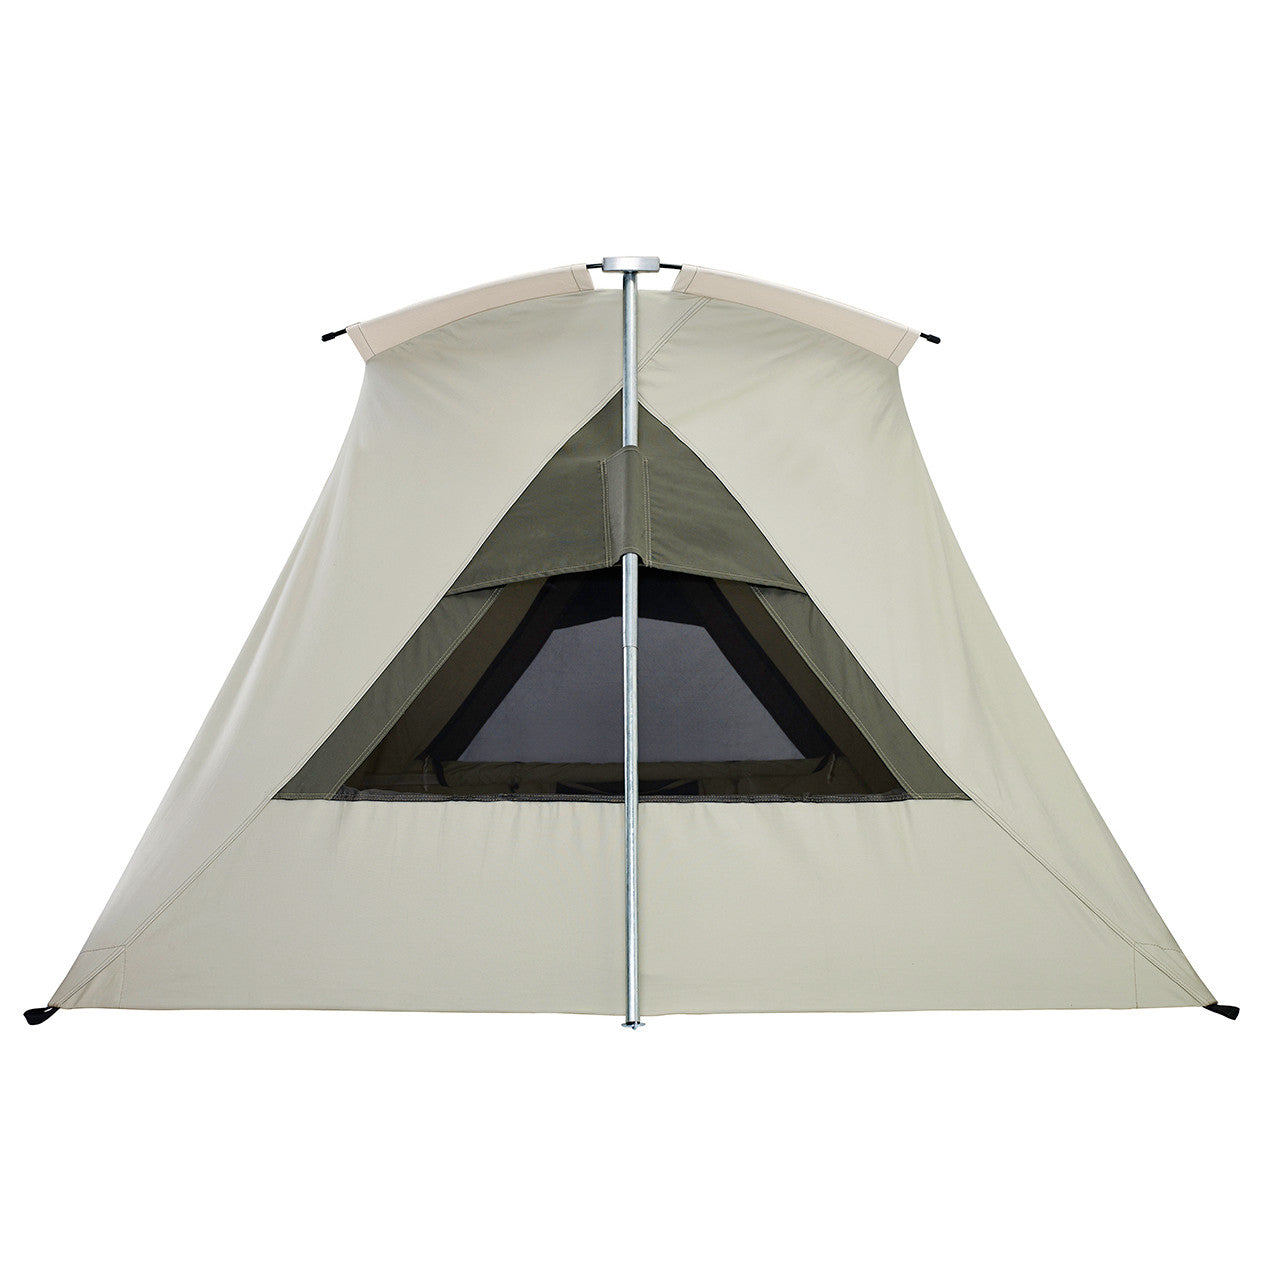 Kodiak Canvas Camping Tents and Camping Gear